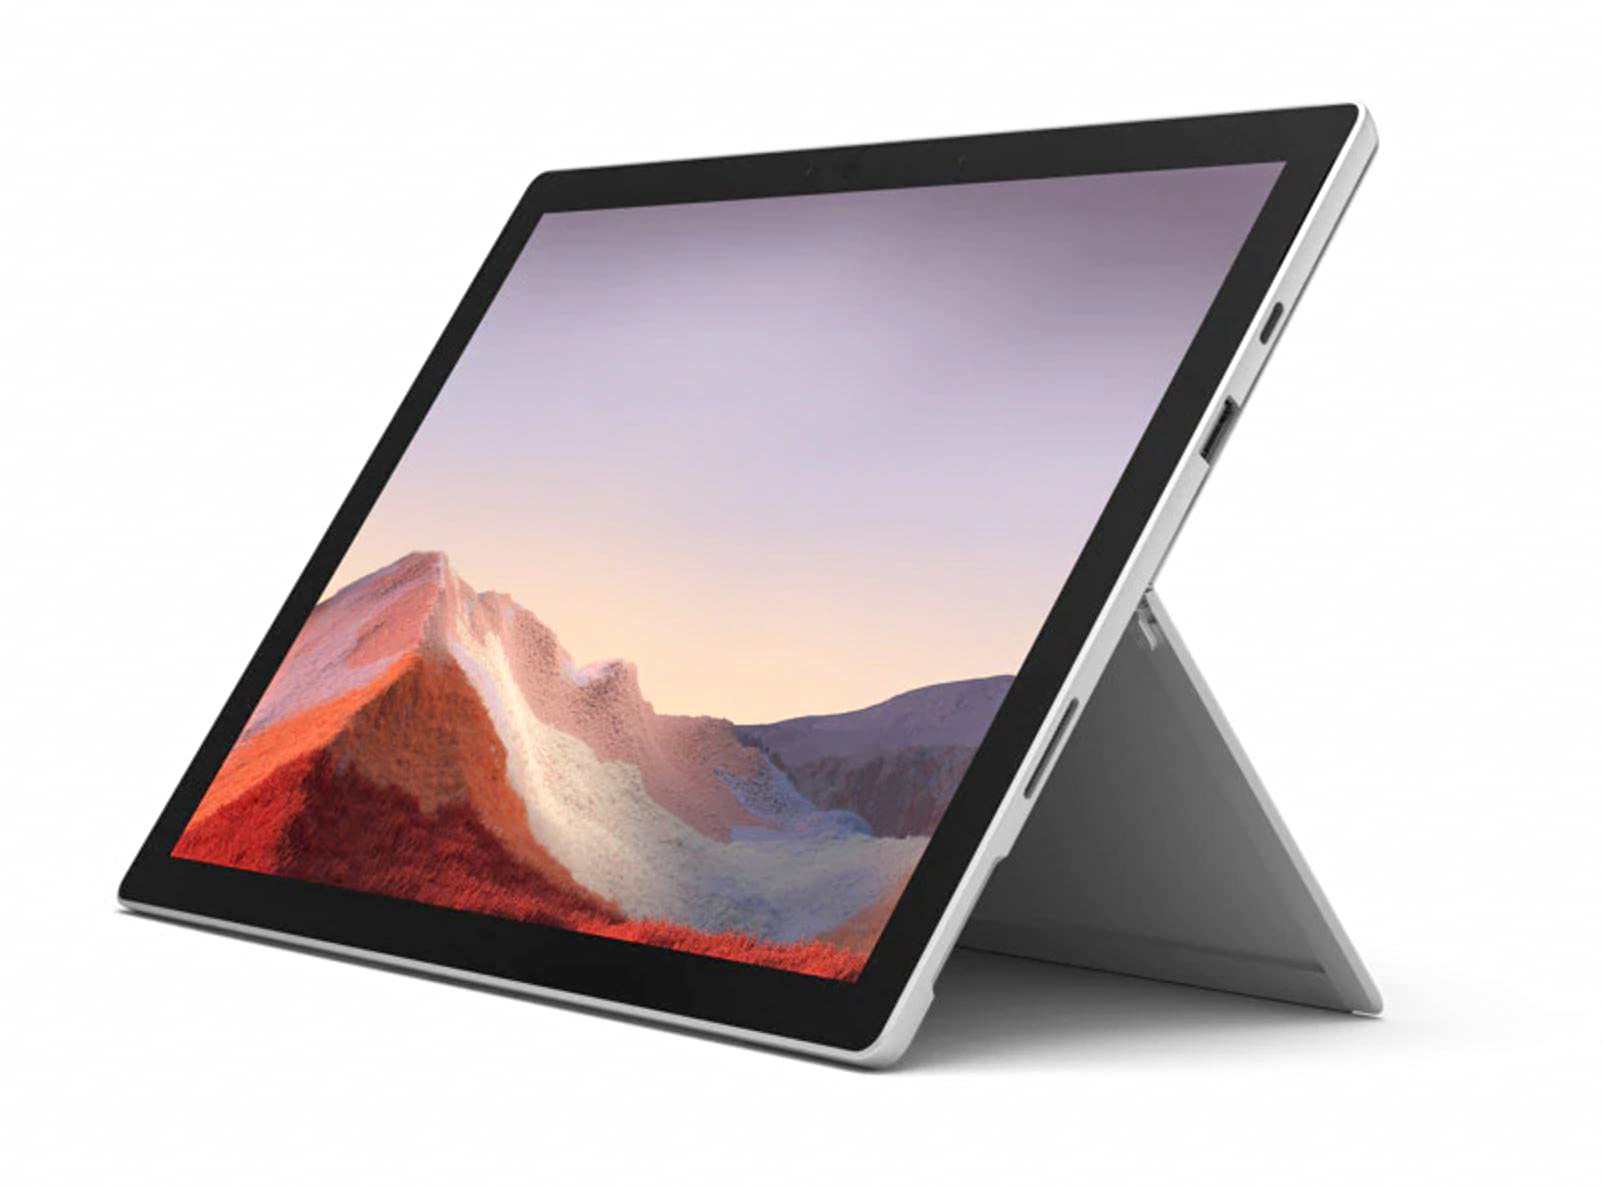 Microsoft Surface Pro 7+ 256GB 第 11 代 i7 16GB RAM，搭载 Windows 10 Pro（12.3 英寸触摸屏，Wi-Fi，2.8GHz i7-1165G7，15 小时电池，最新版本）商业包装，铂金 1NC-00001